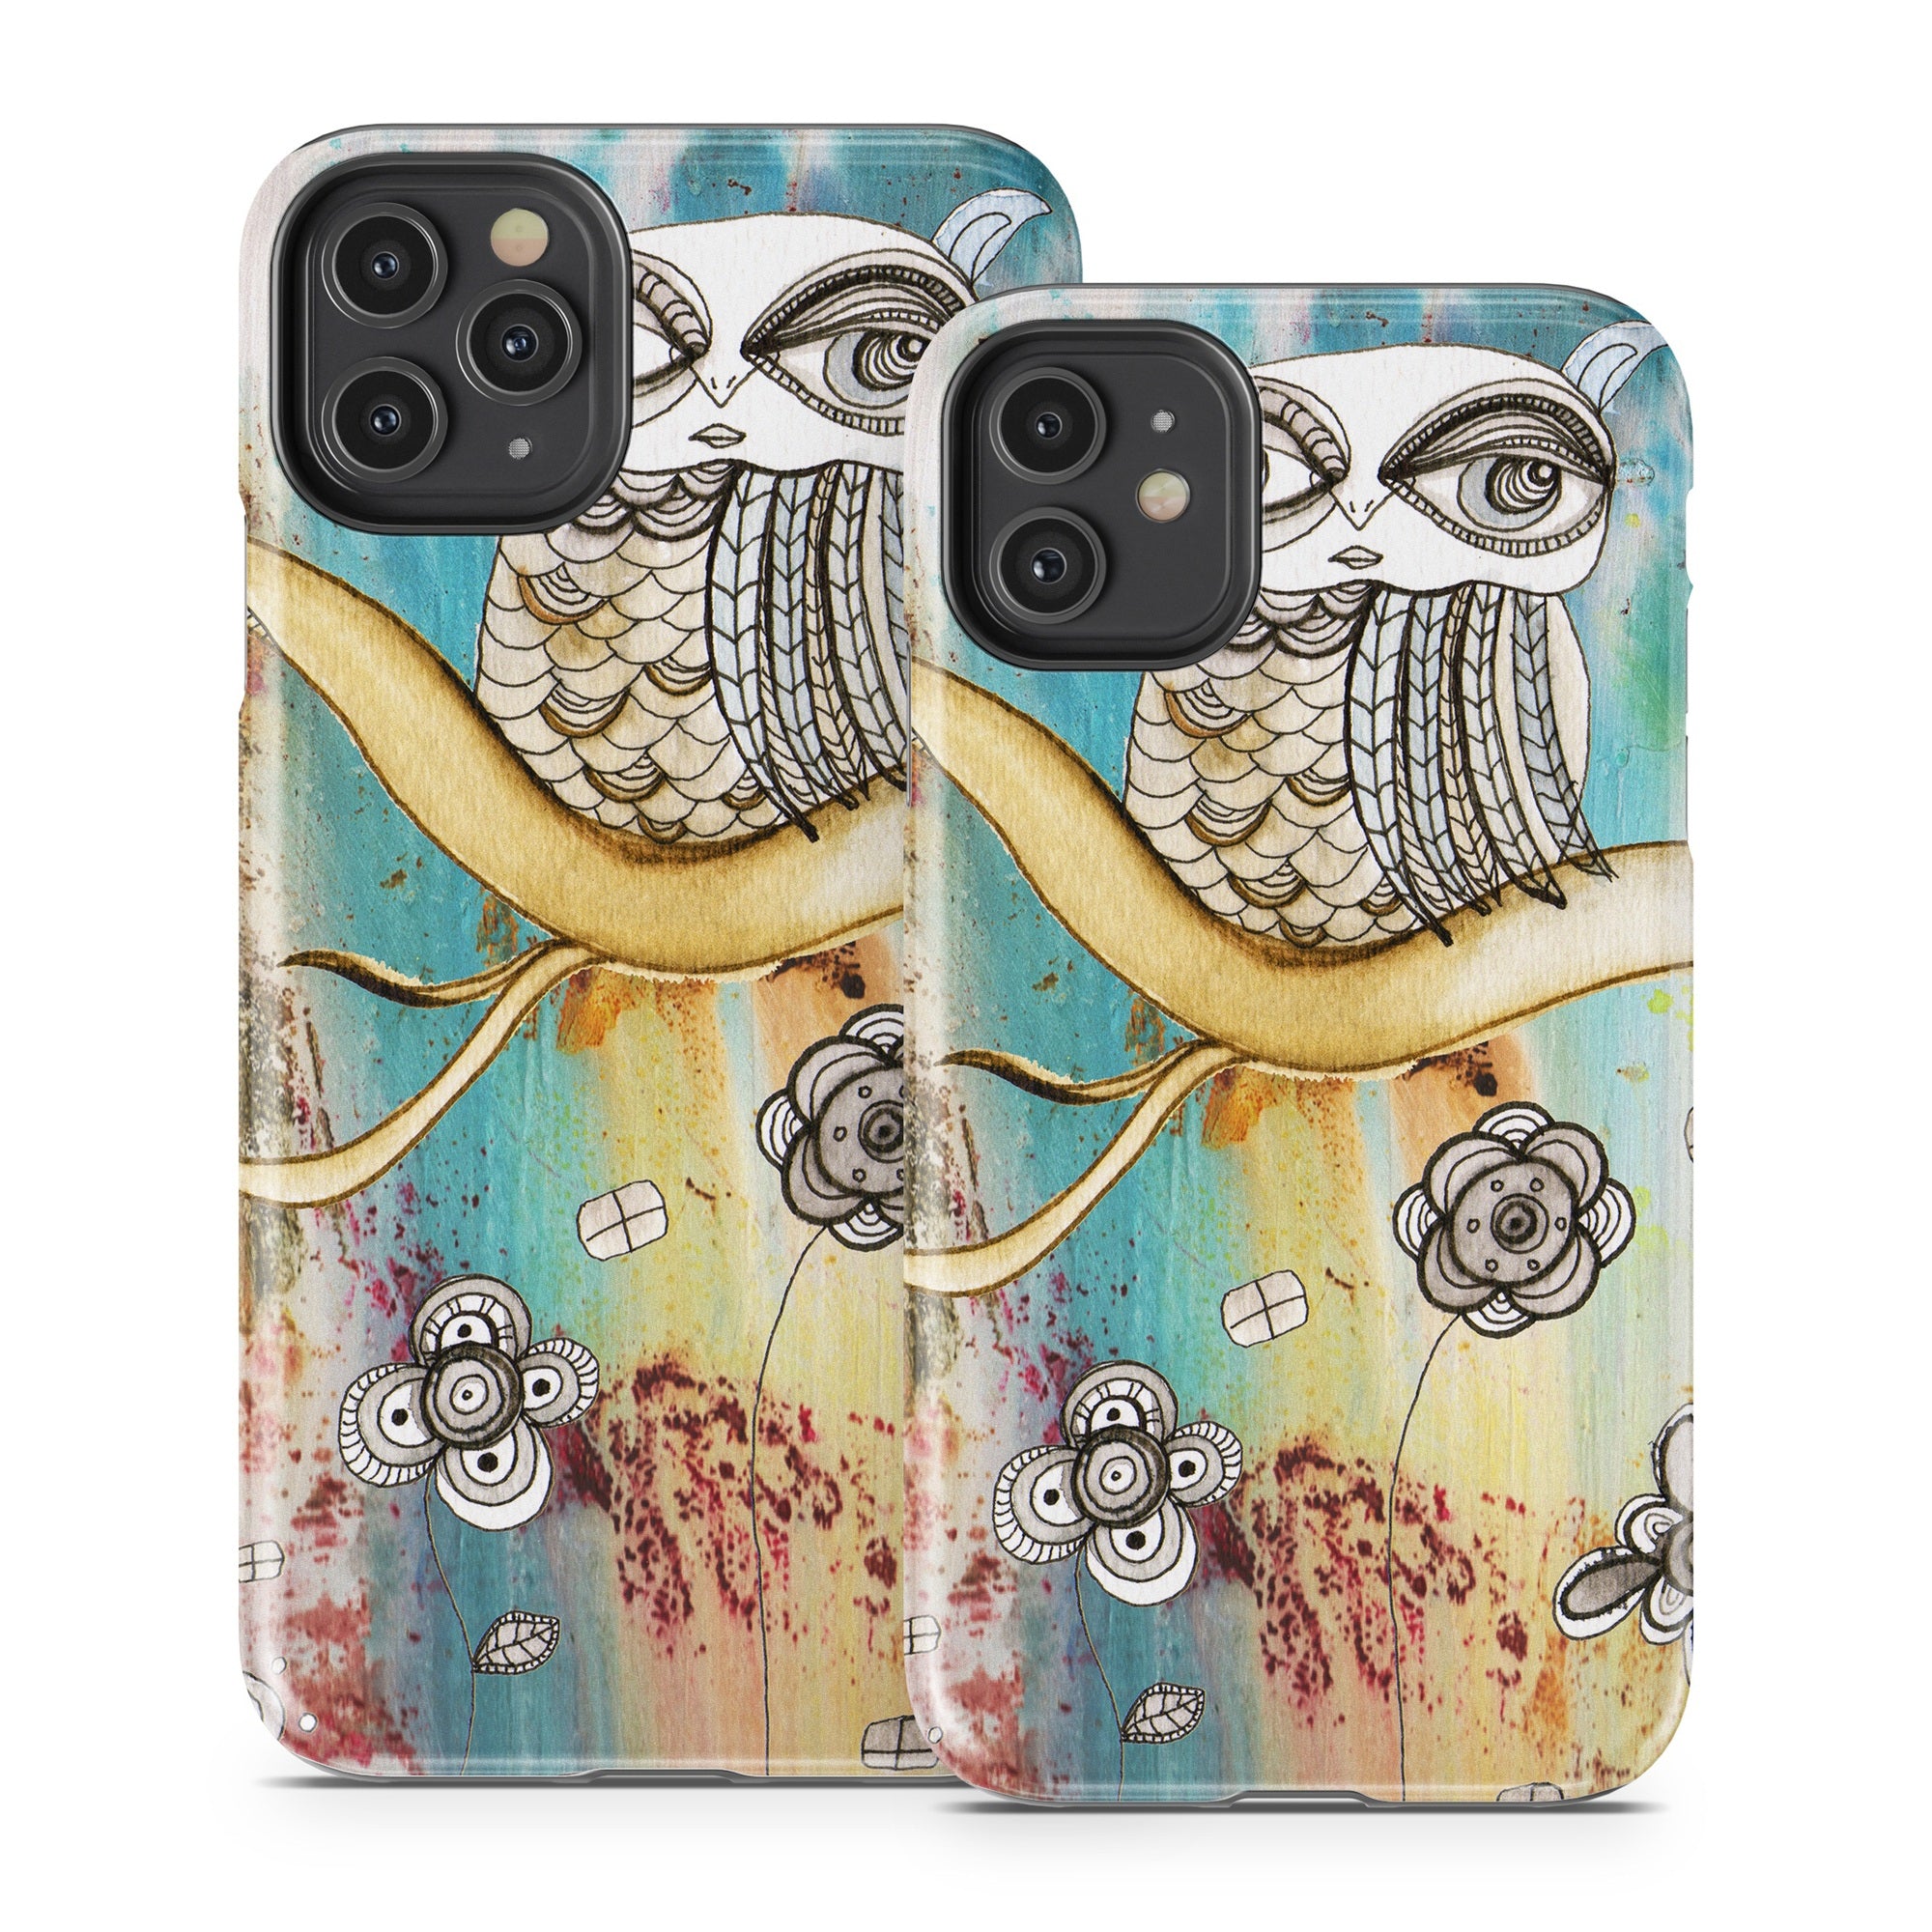 Surreal Owl - Apple iPhone 11 Tough Case